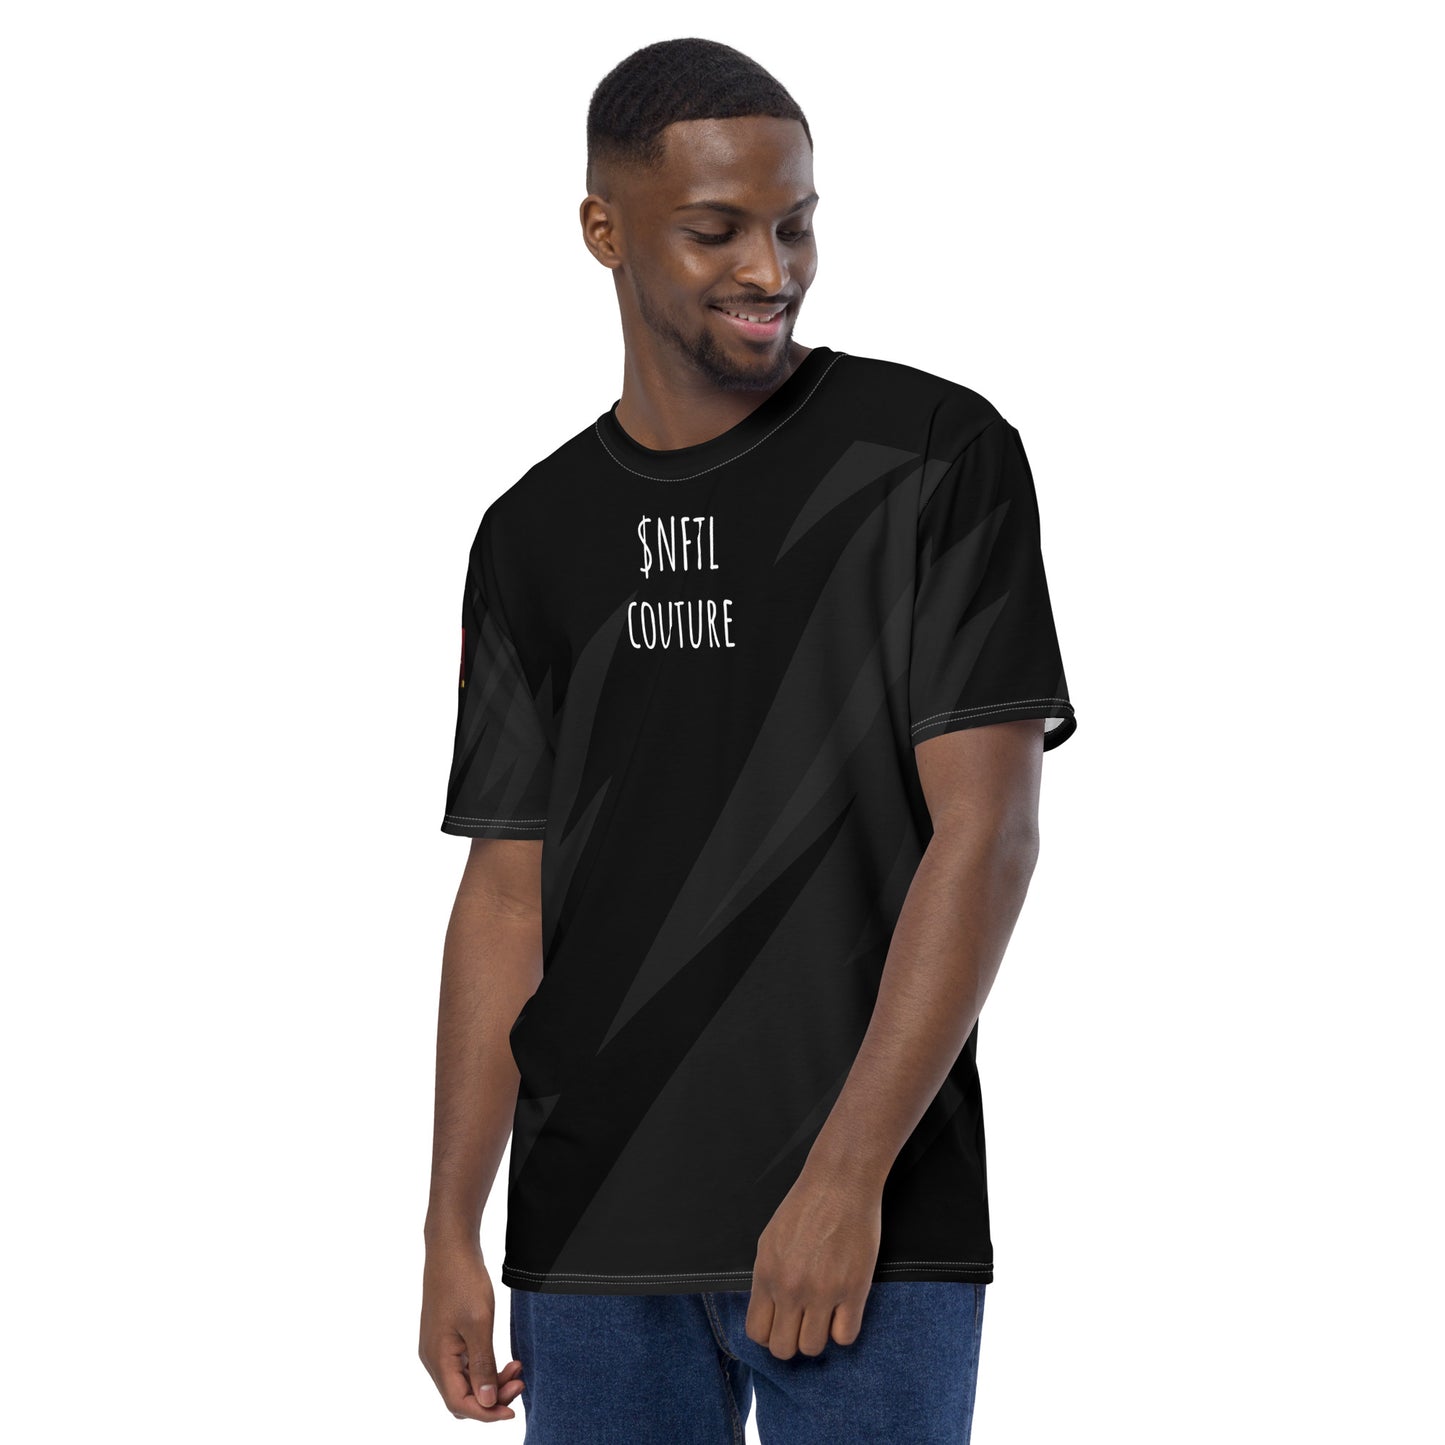 $NFTL couture Men's t-shirt